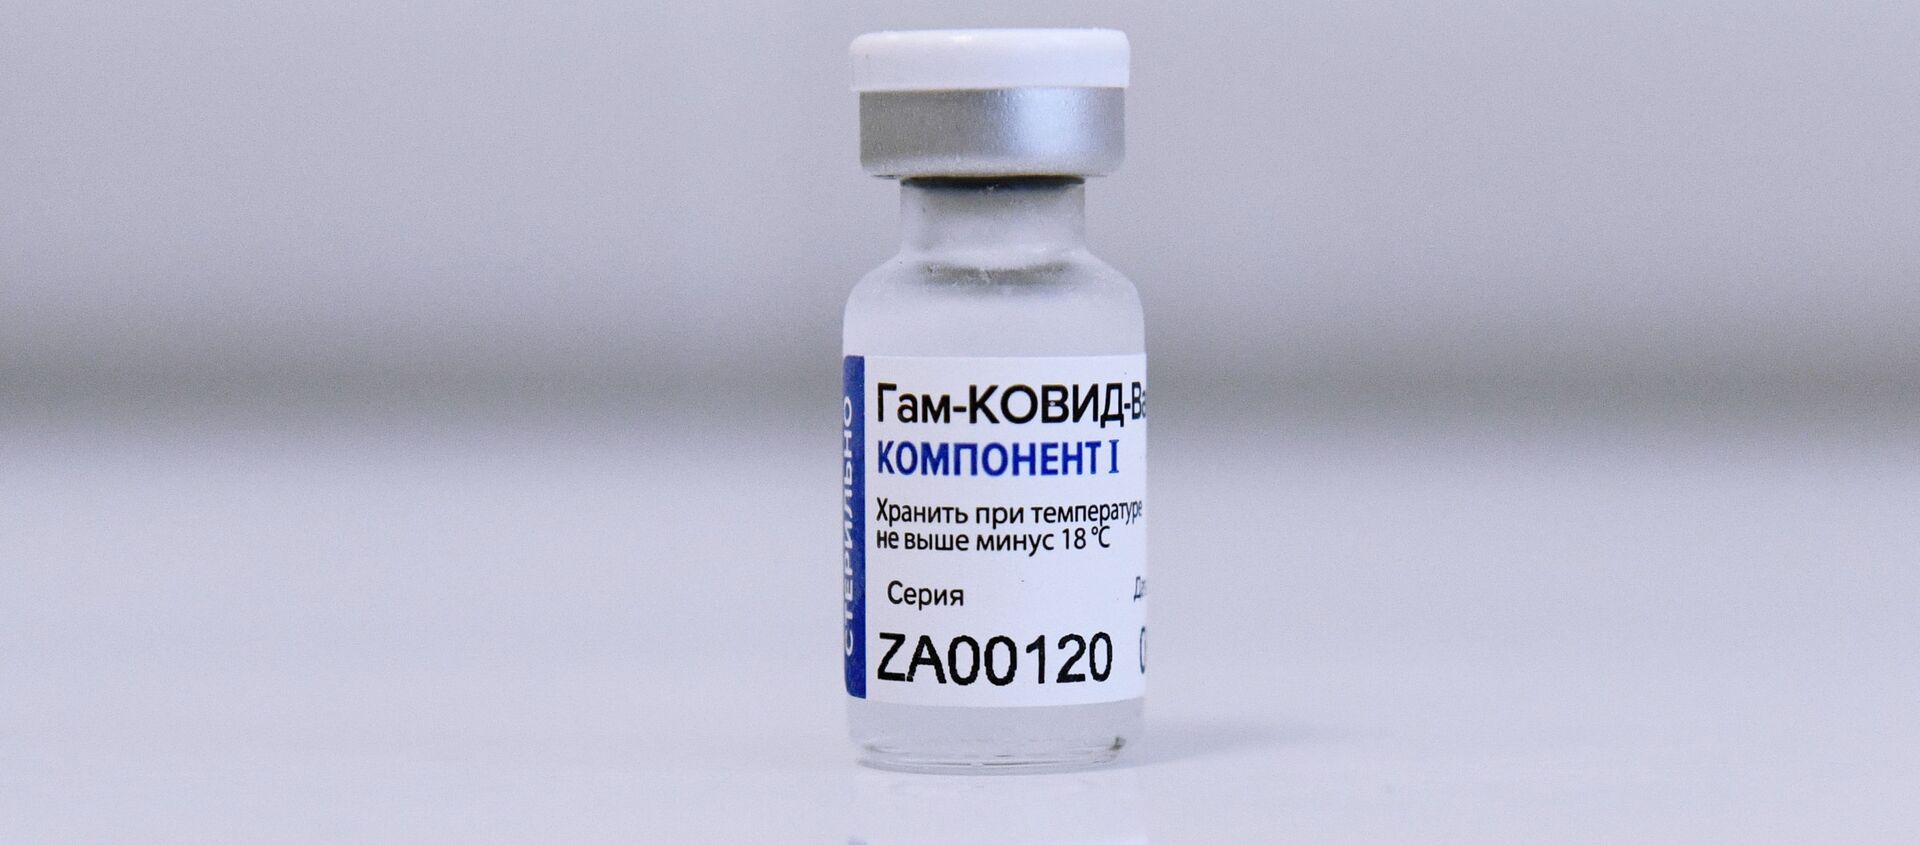 Флакон с вакциной Гам-КОВИД-Вак - Sputnik Молдова, 1920, 02.02.2021